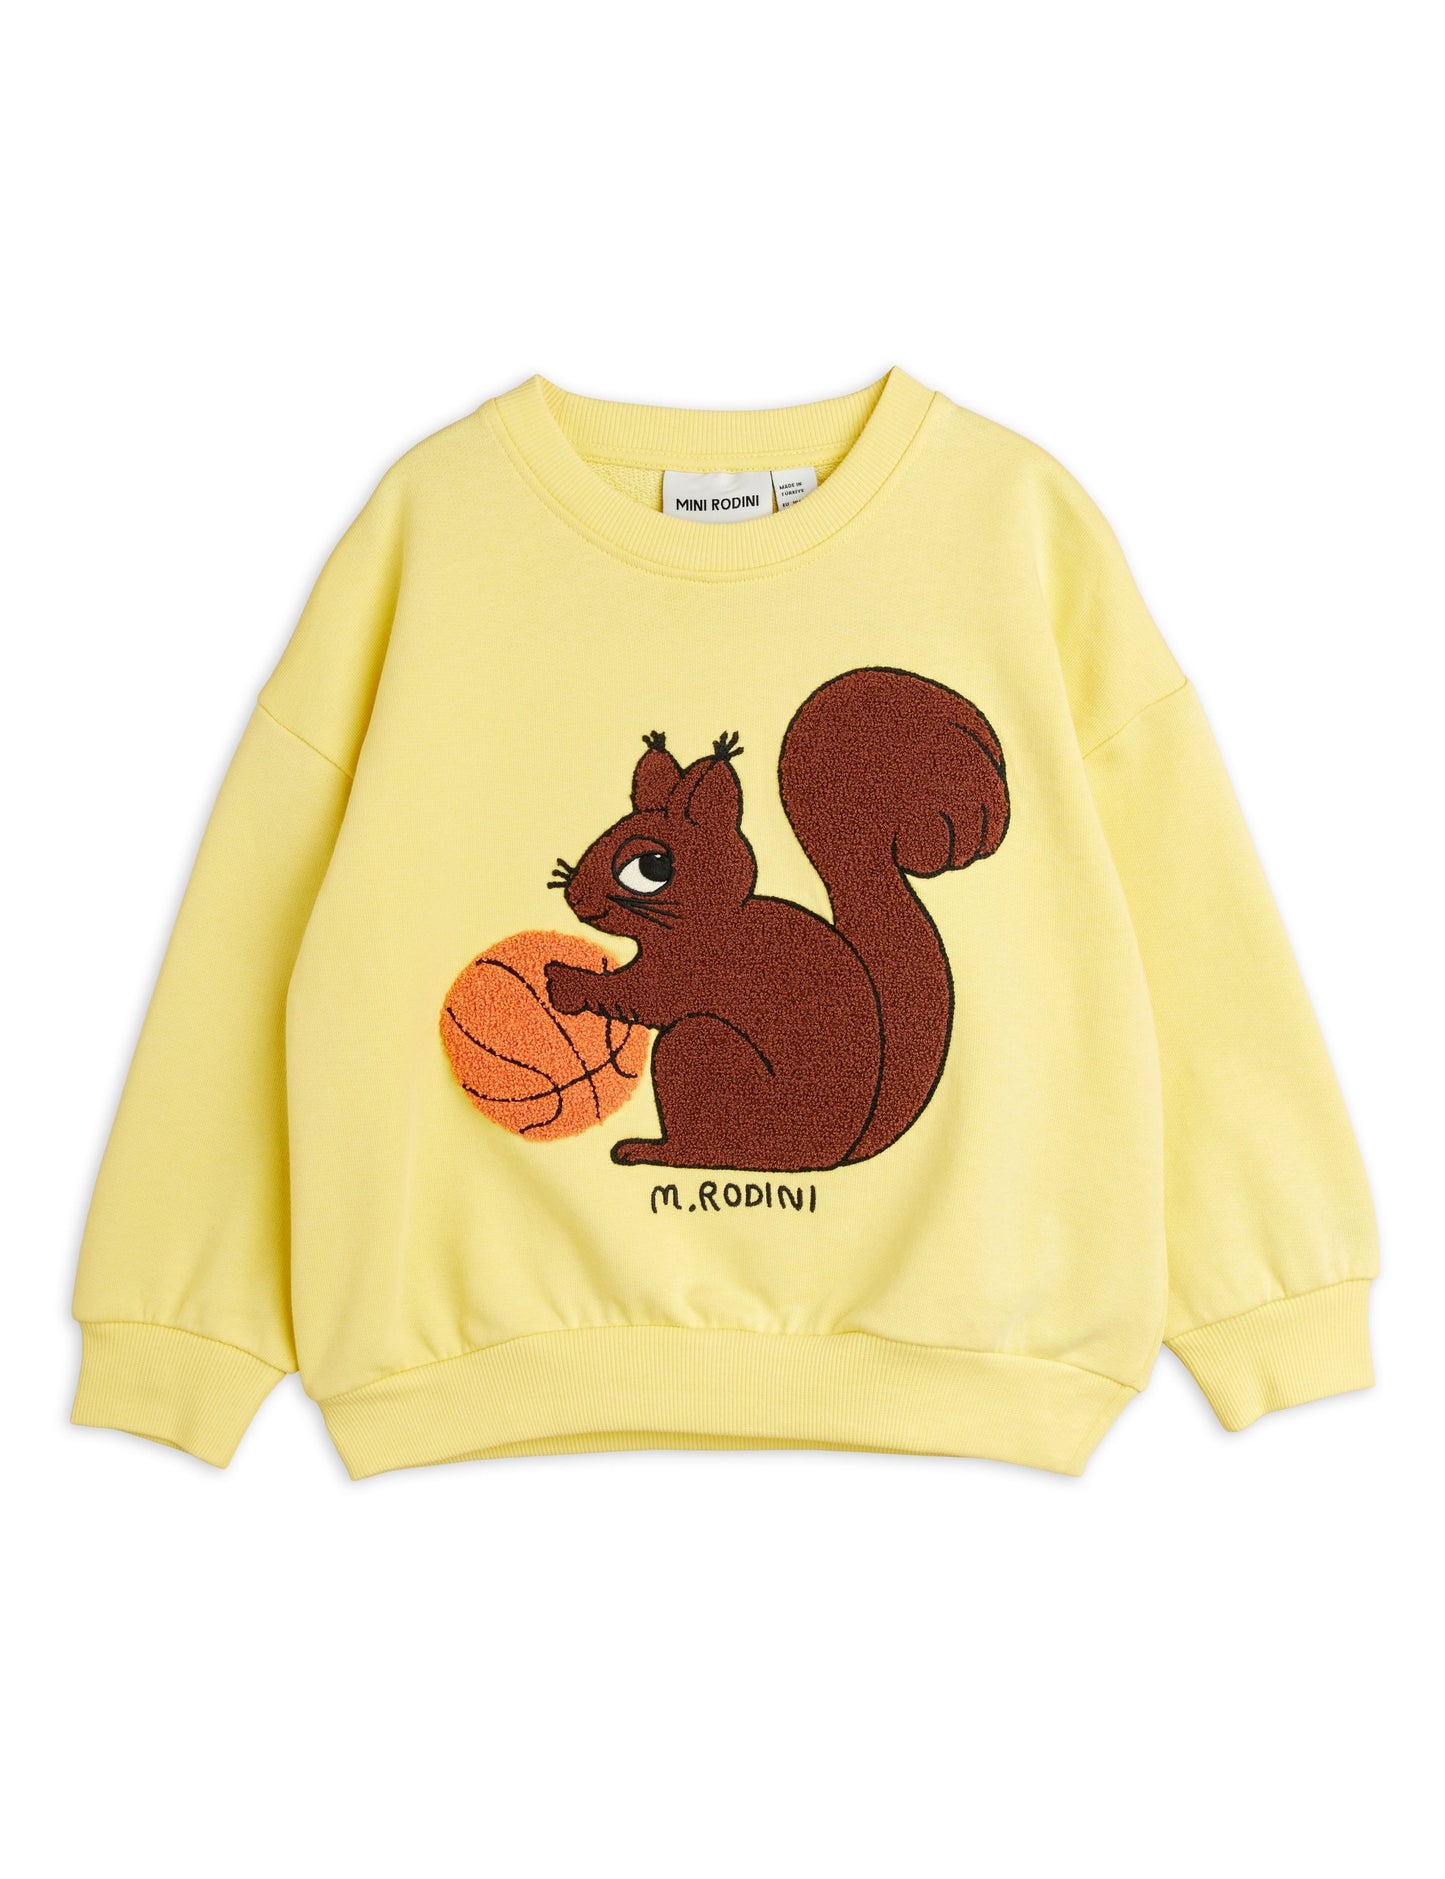 Squirrel Emblem Sweatshirt